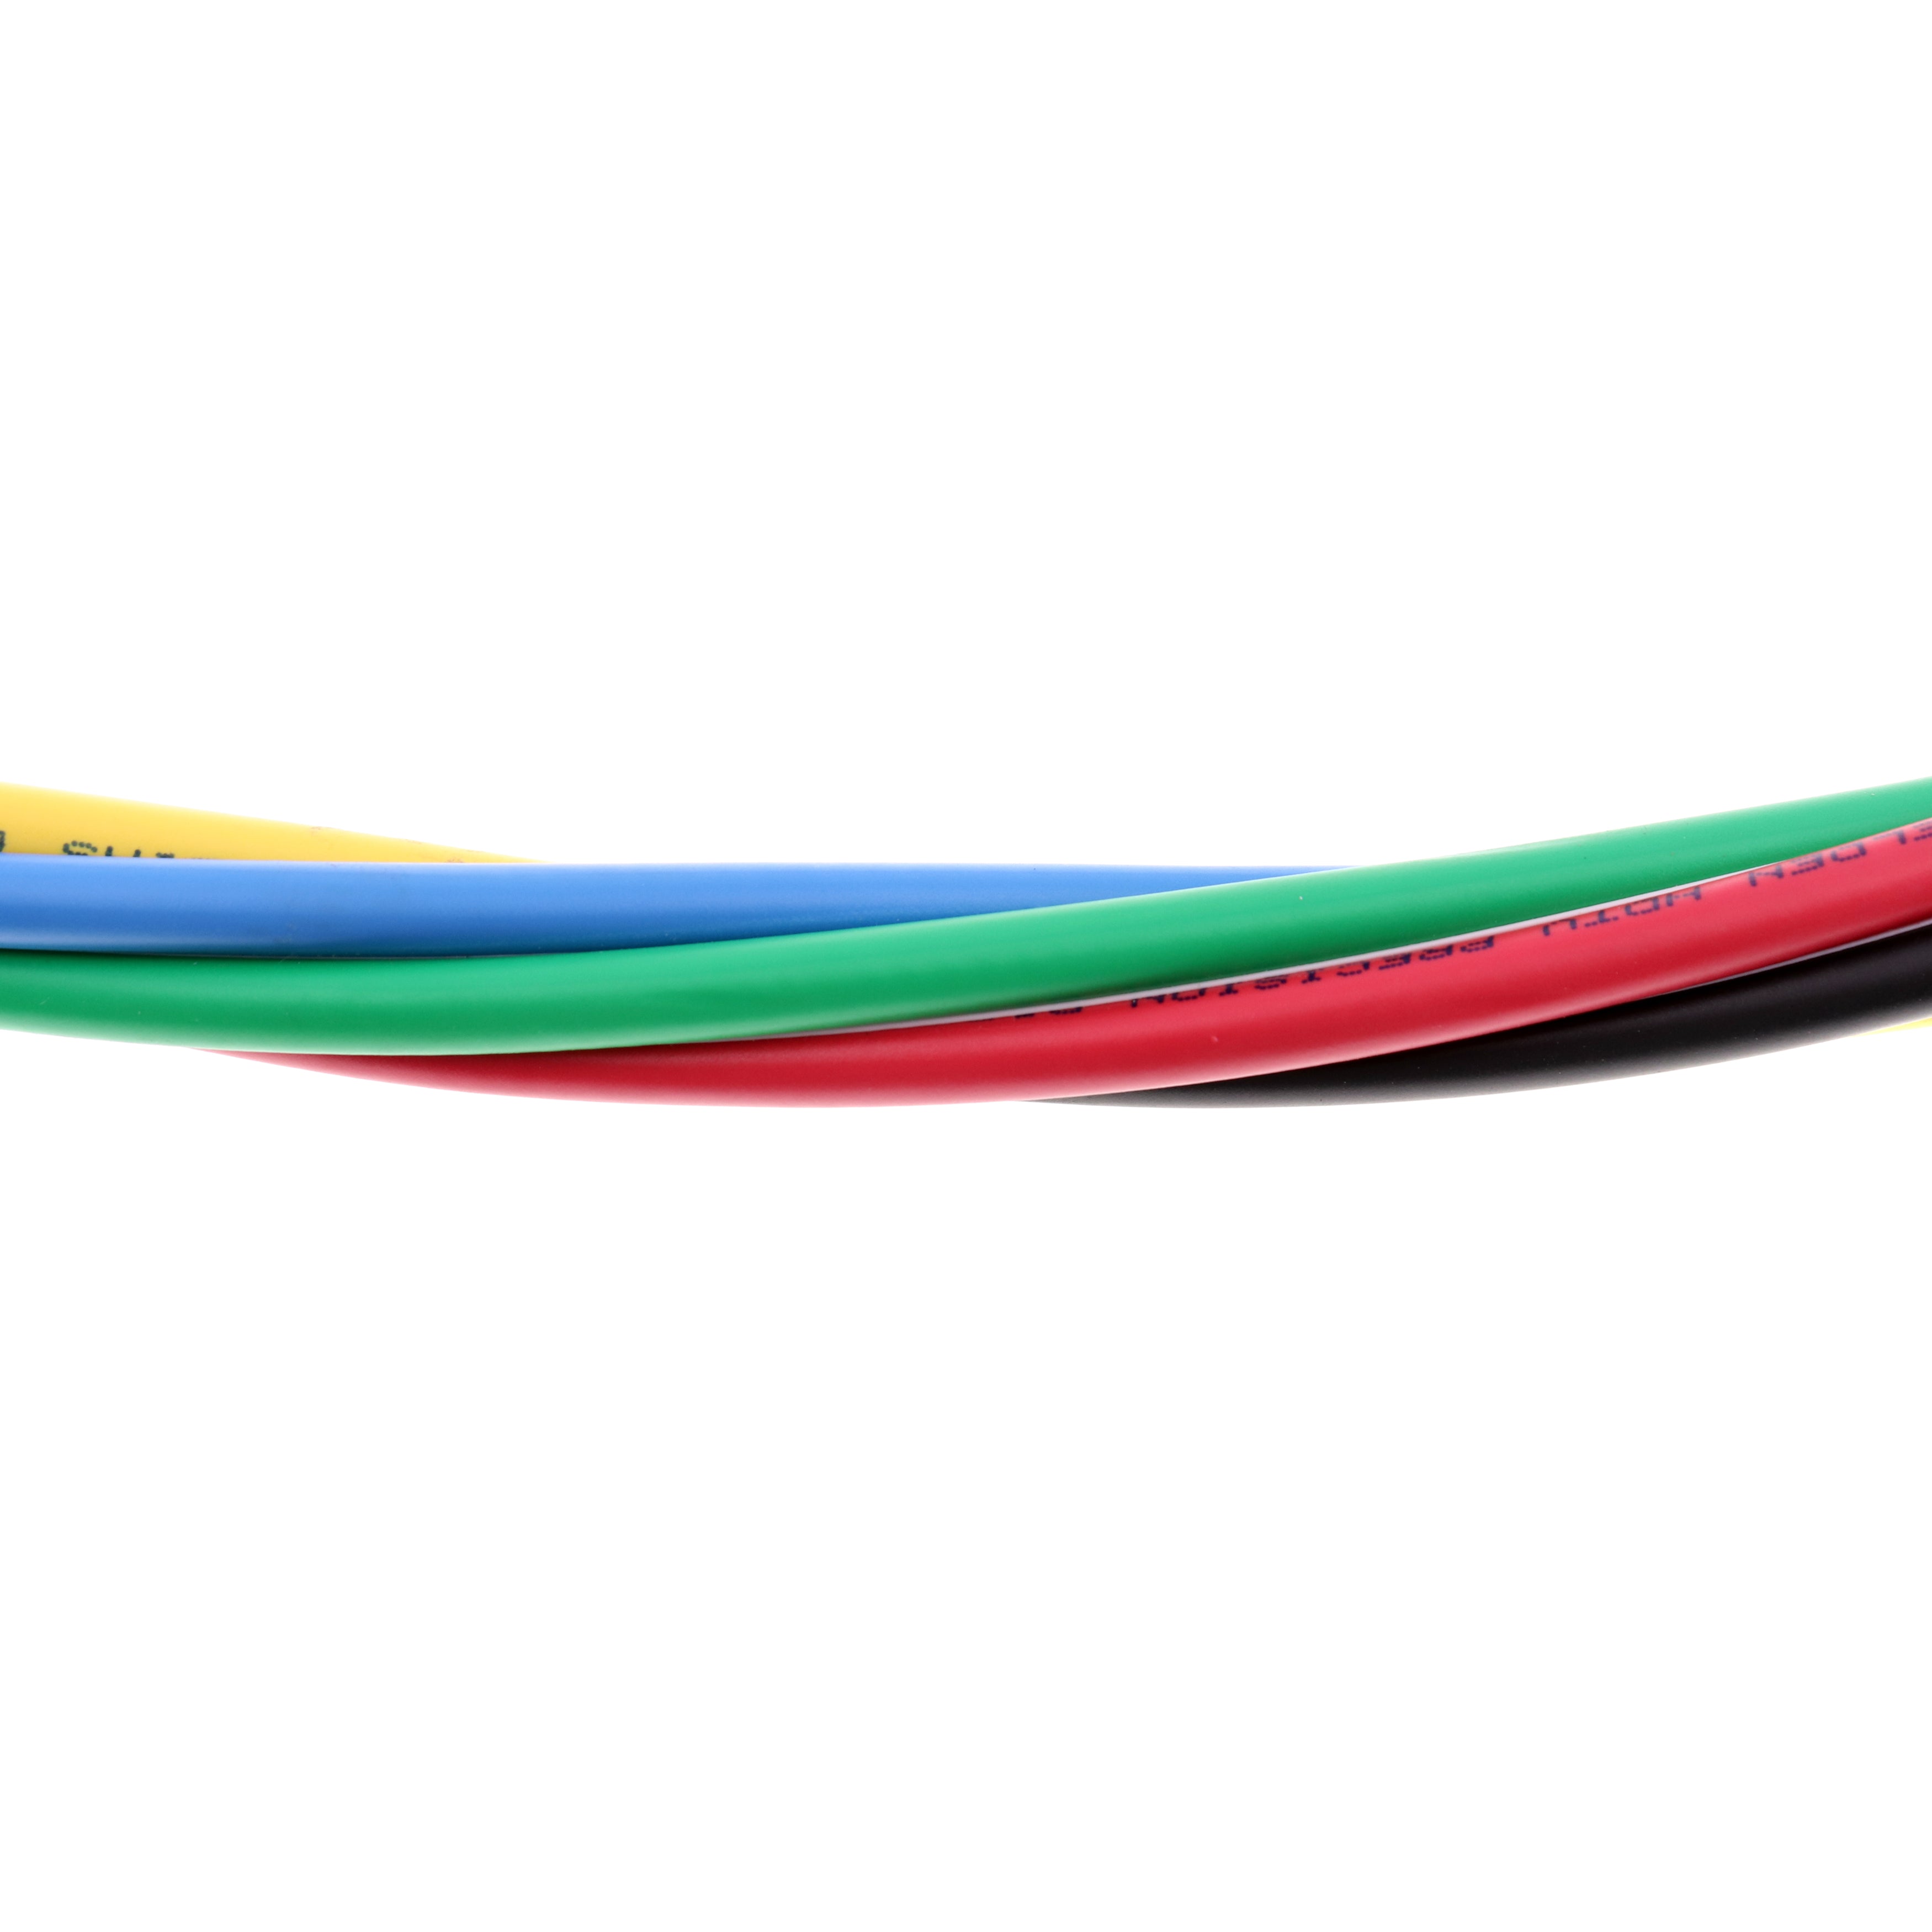 Belden, BELDEN 1505S5 BRILLIANCE RGB SNAKE CABLE, 5-COAX RG59/ SDI VIDEO CABLE, CMR, PER